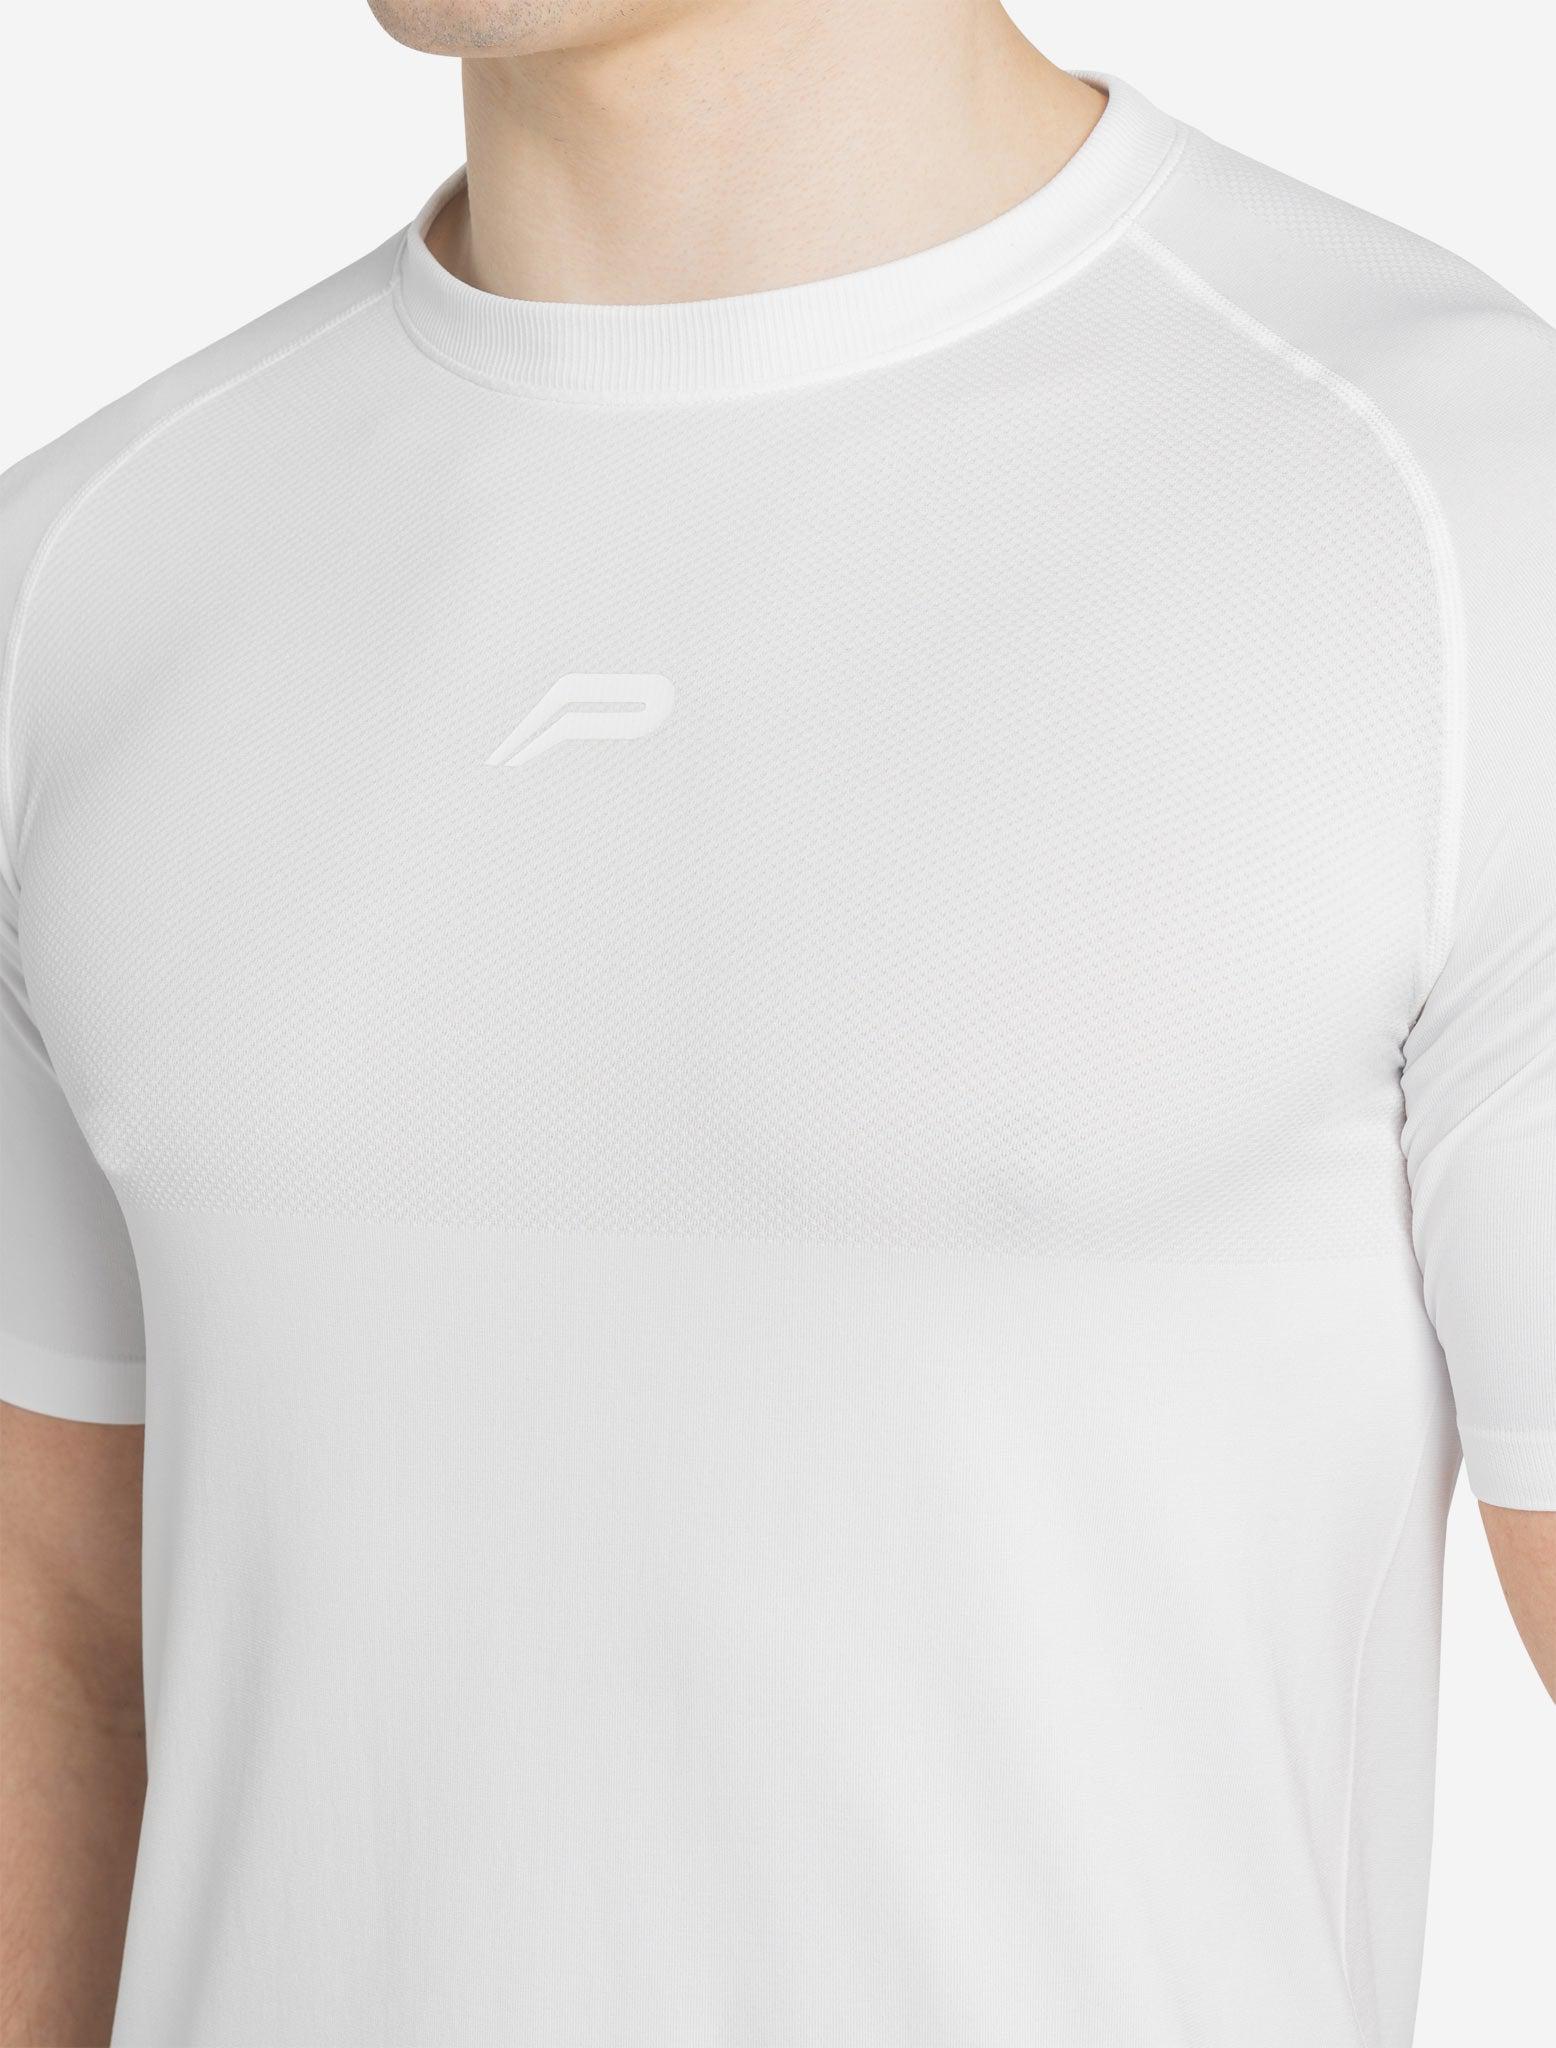 Seamless T-shirt / White Pursue Fitness 2